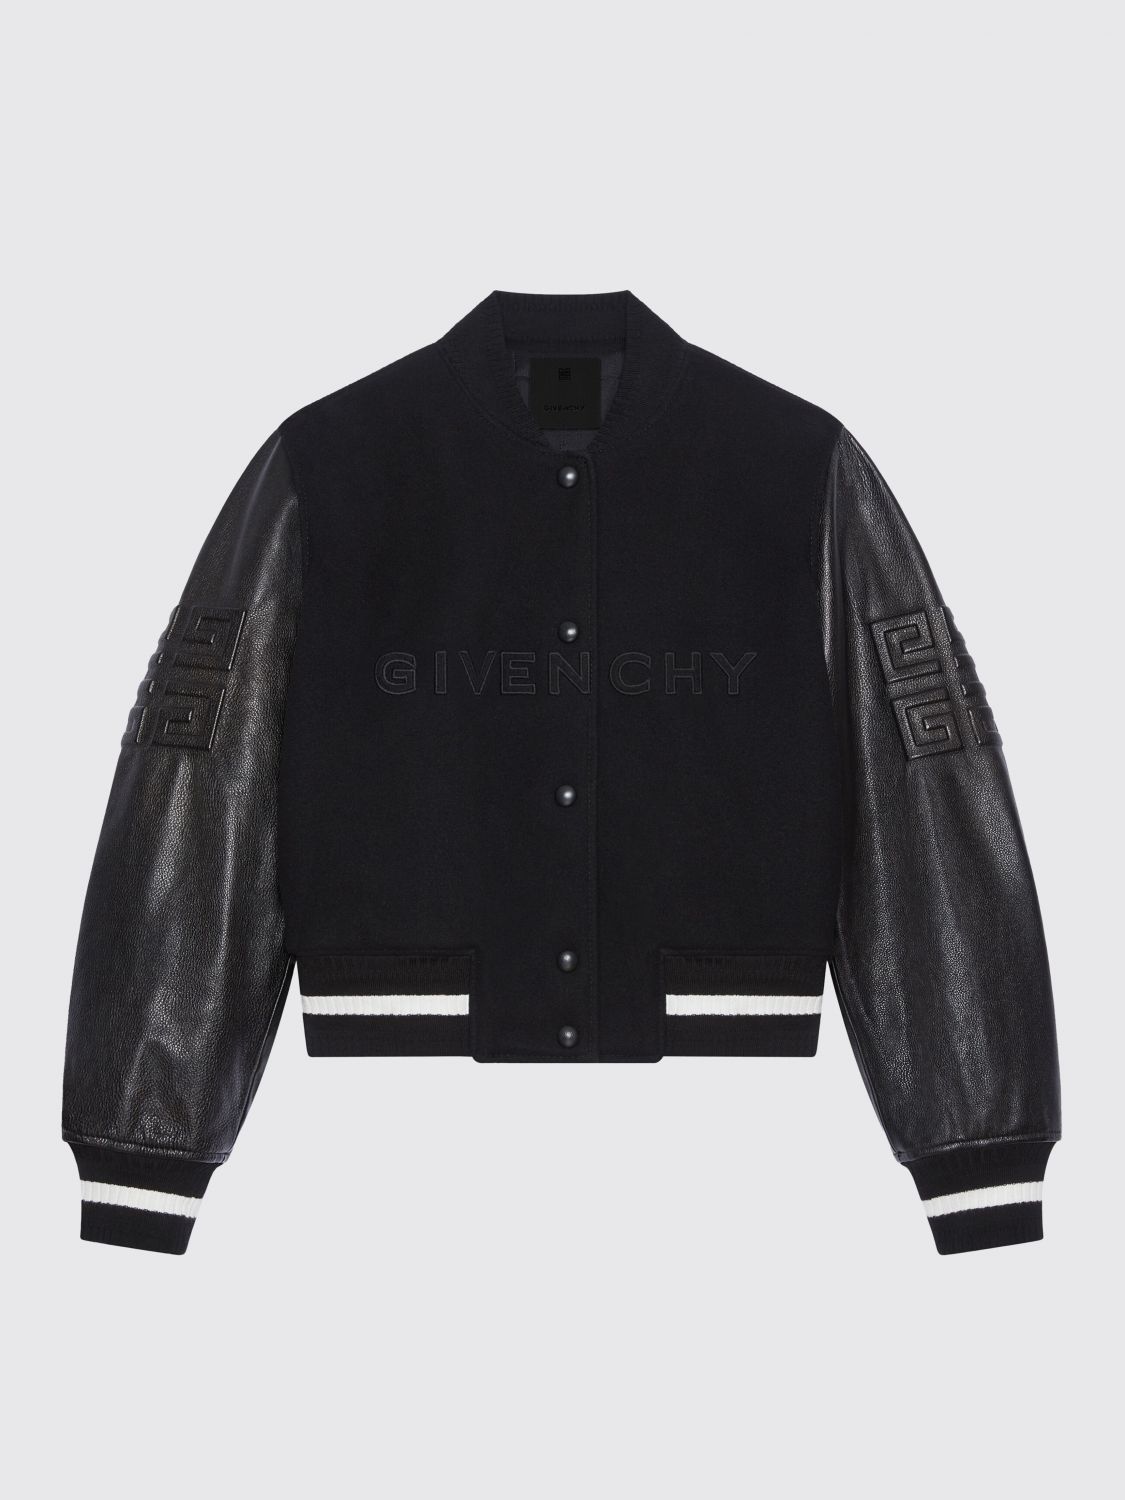 Givenchy Givenchy Jacket Woman Black | Grailed